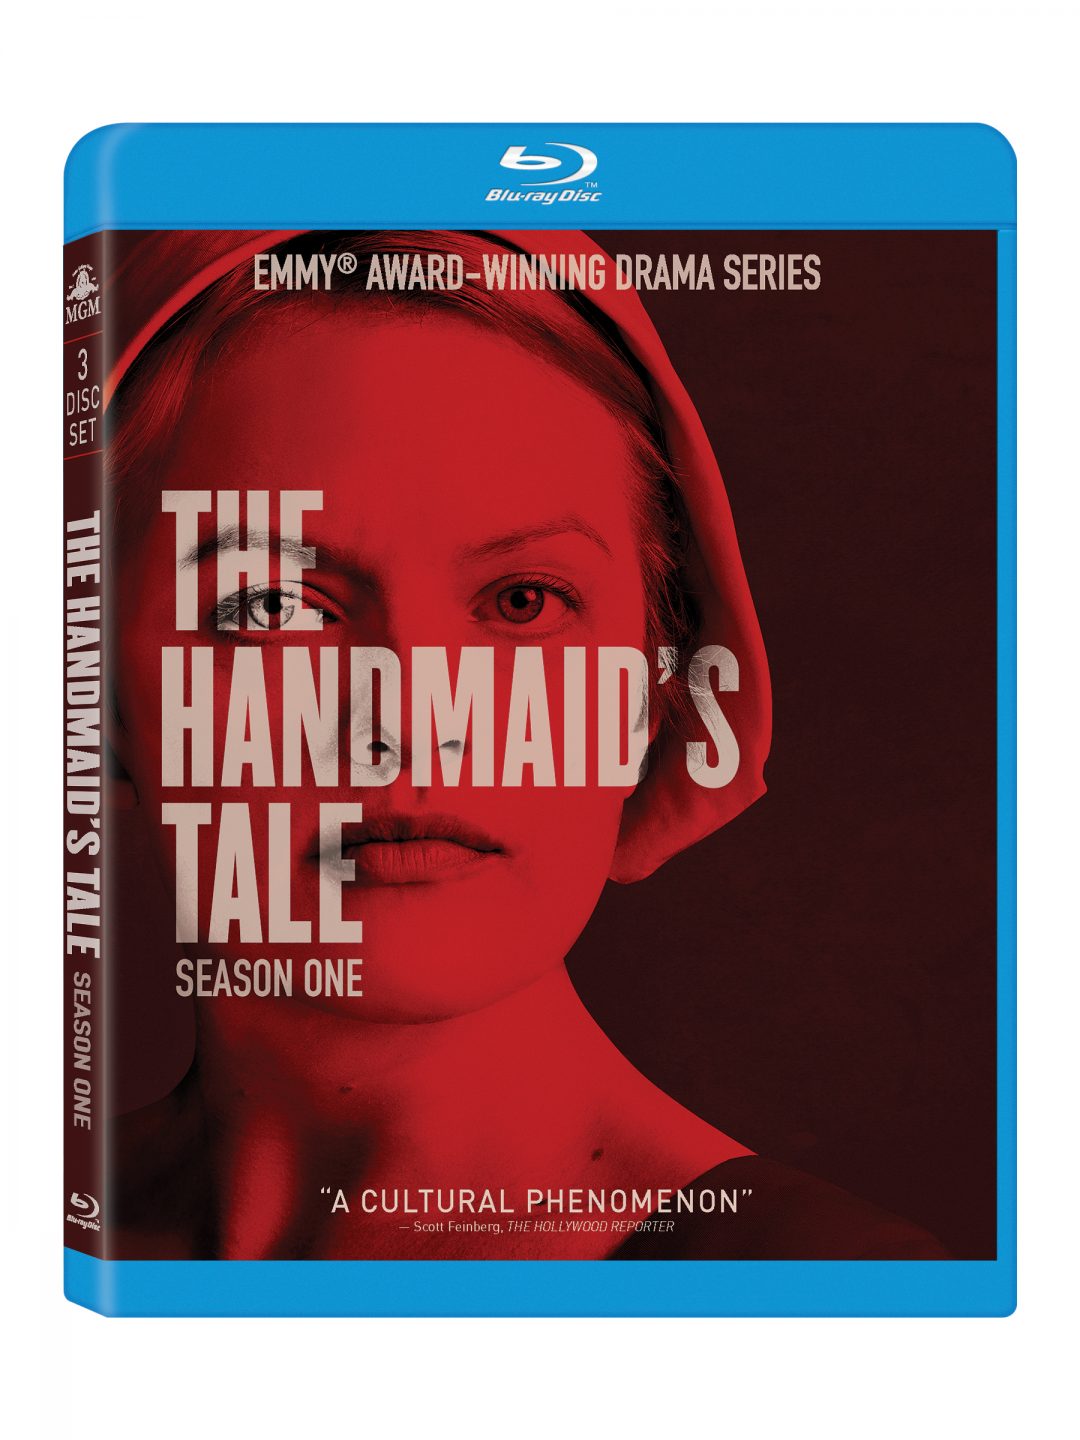 The Handmaid's Tale Season One Blu-Ray cover (20th Century Fox Home Entertainment/MGM)